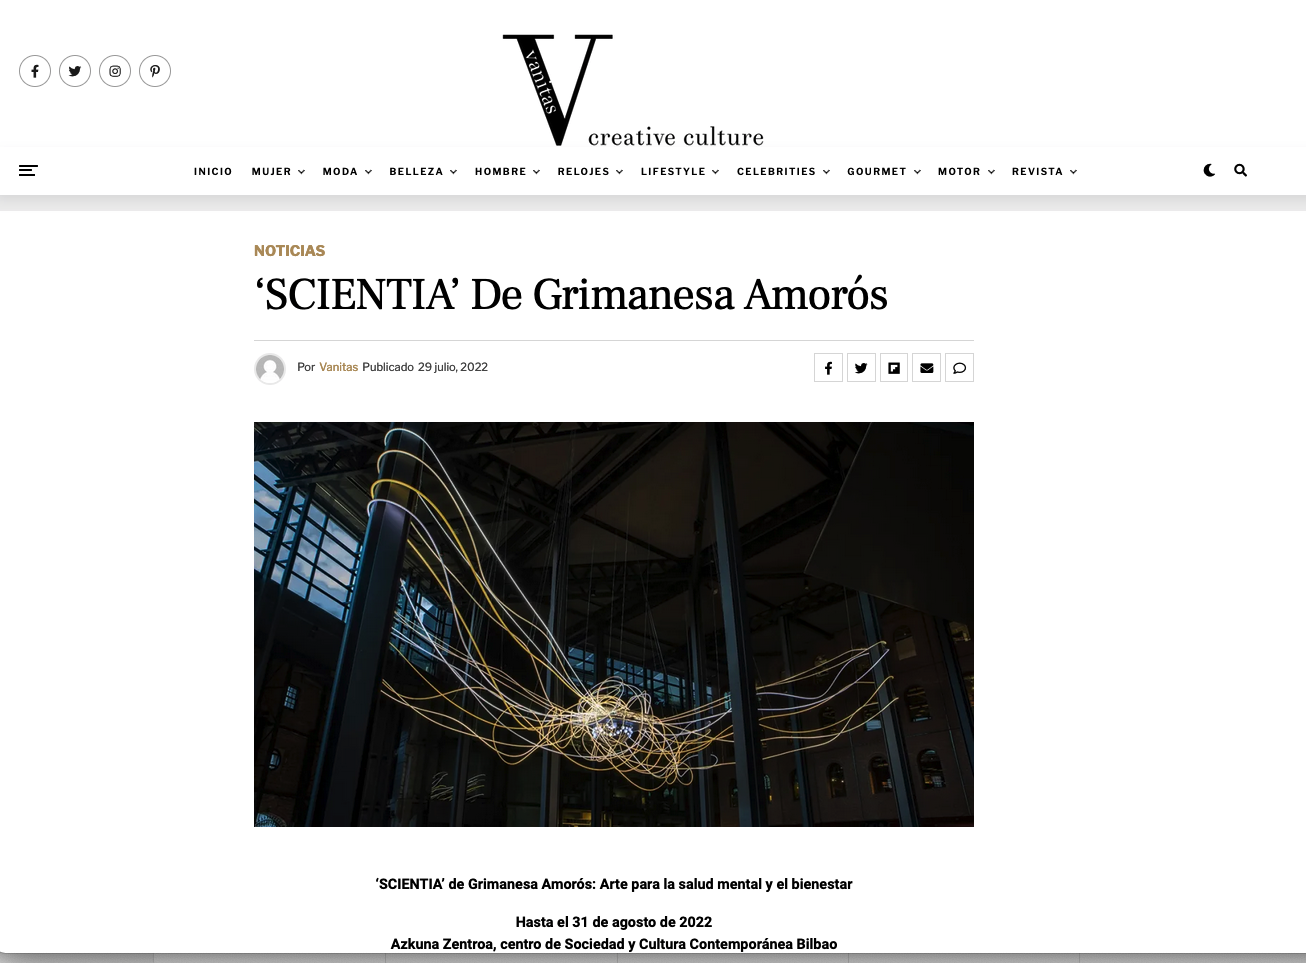 Grimanesa Amoros Scientia light installation article on Vcreative culture